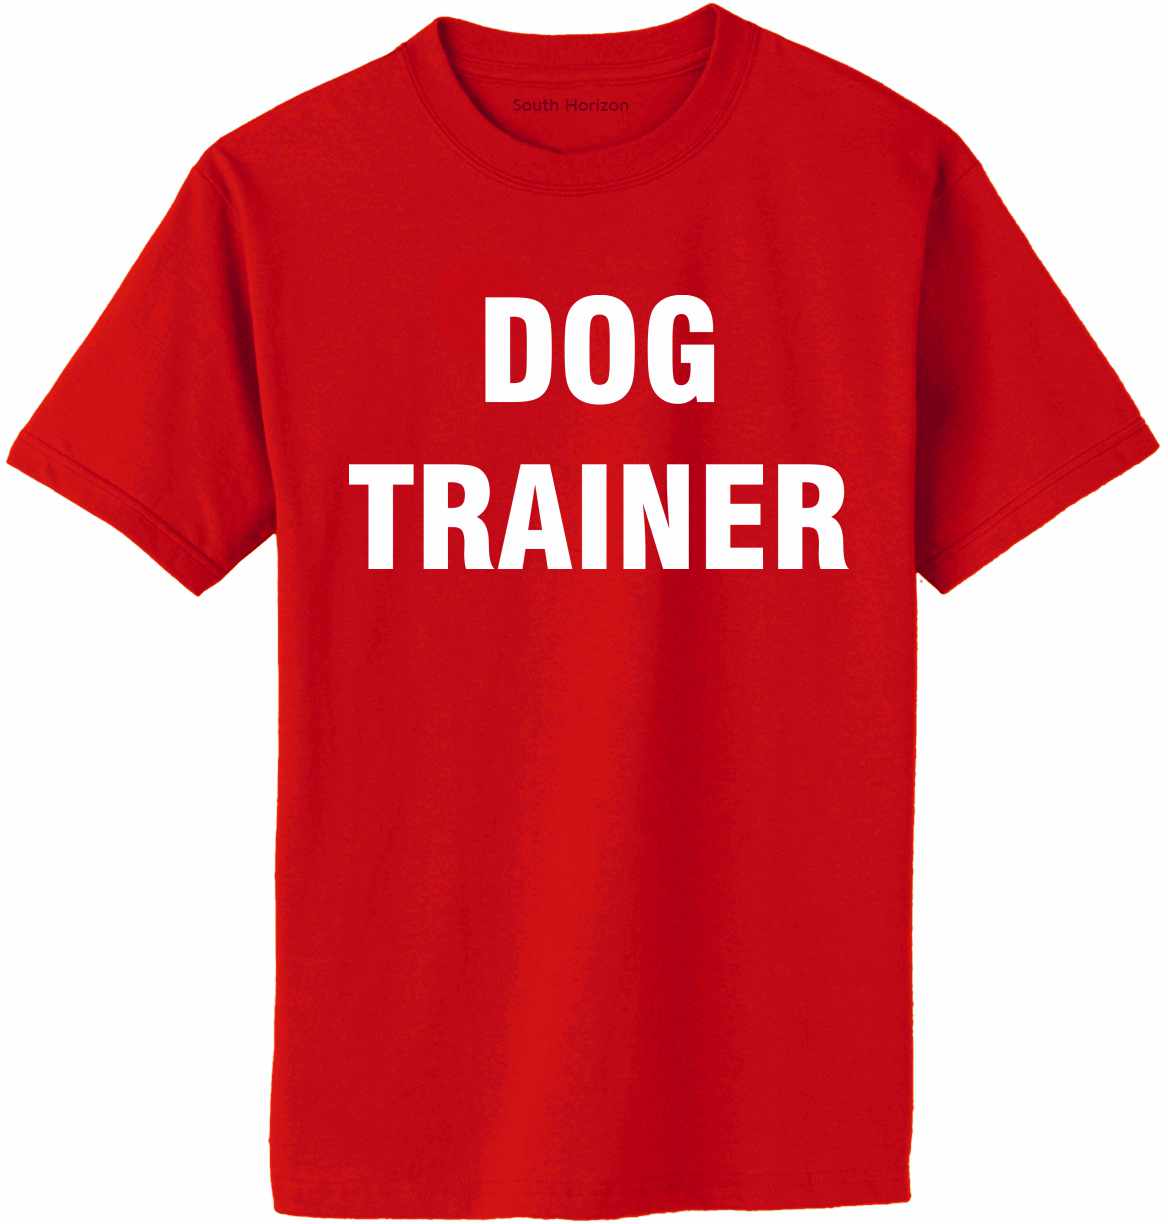 DOG TRAINER Adult T-Shirt (#239-1)